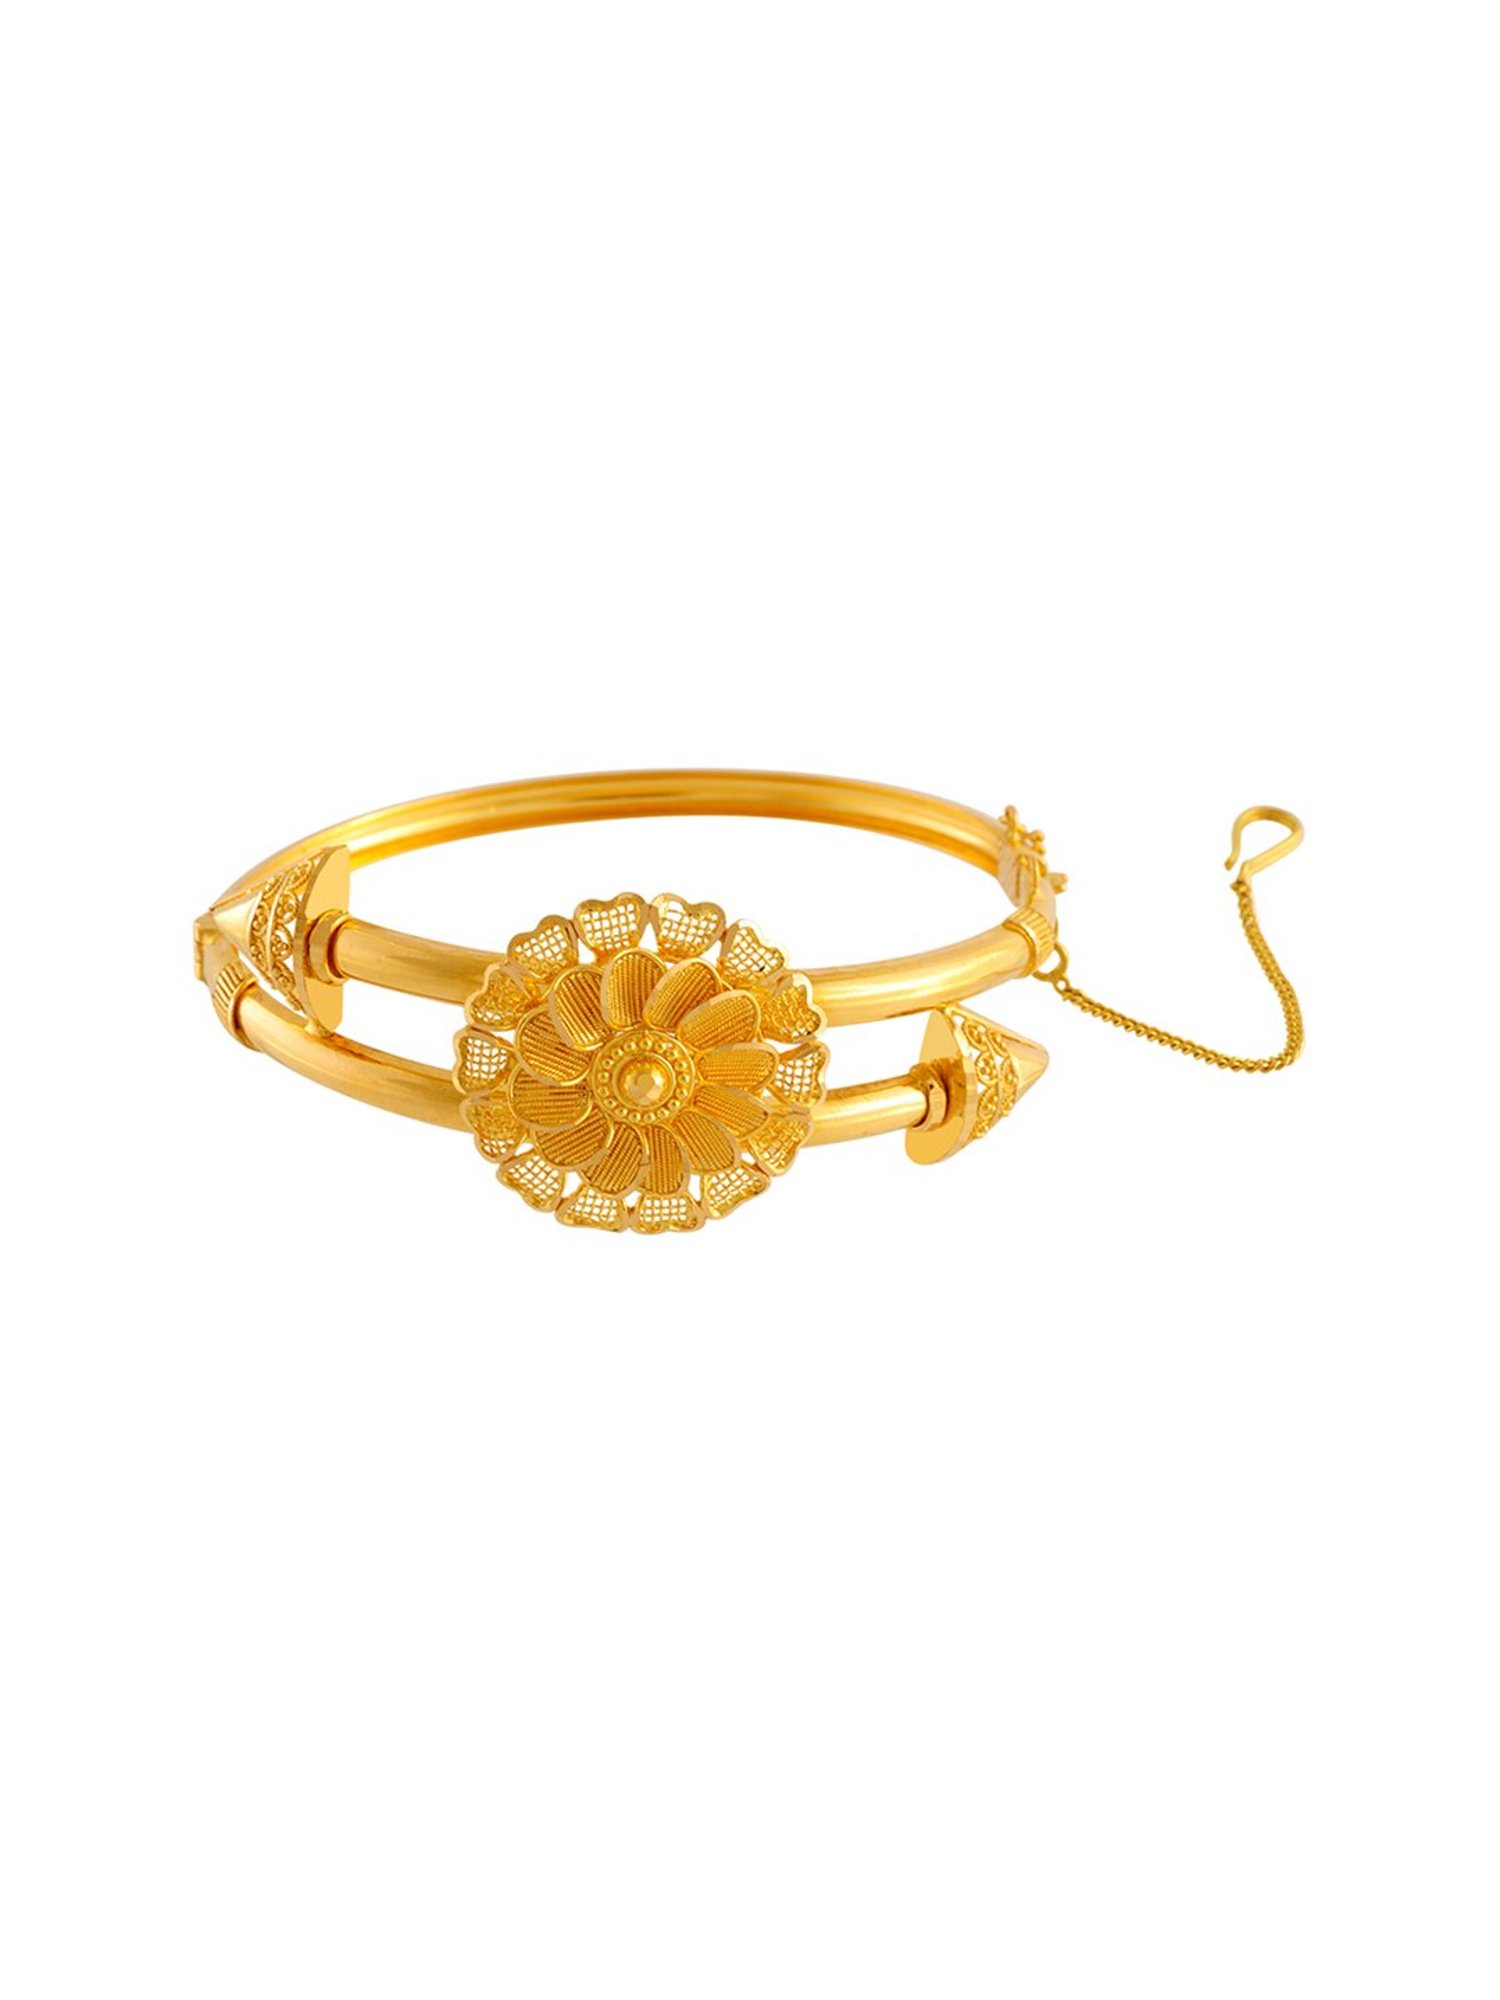 Intricate Floral Antique Gold Bracelet